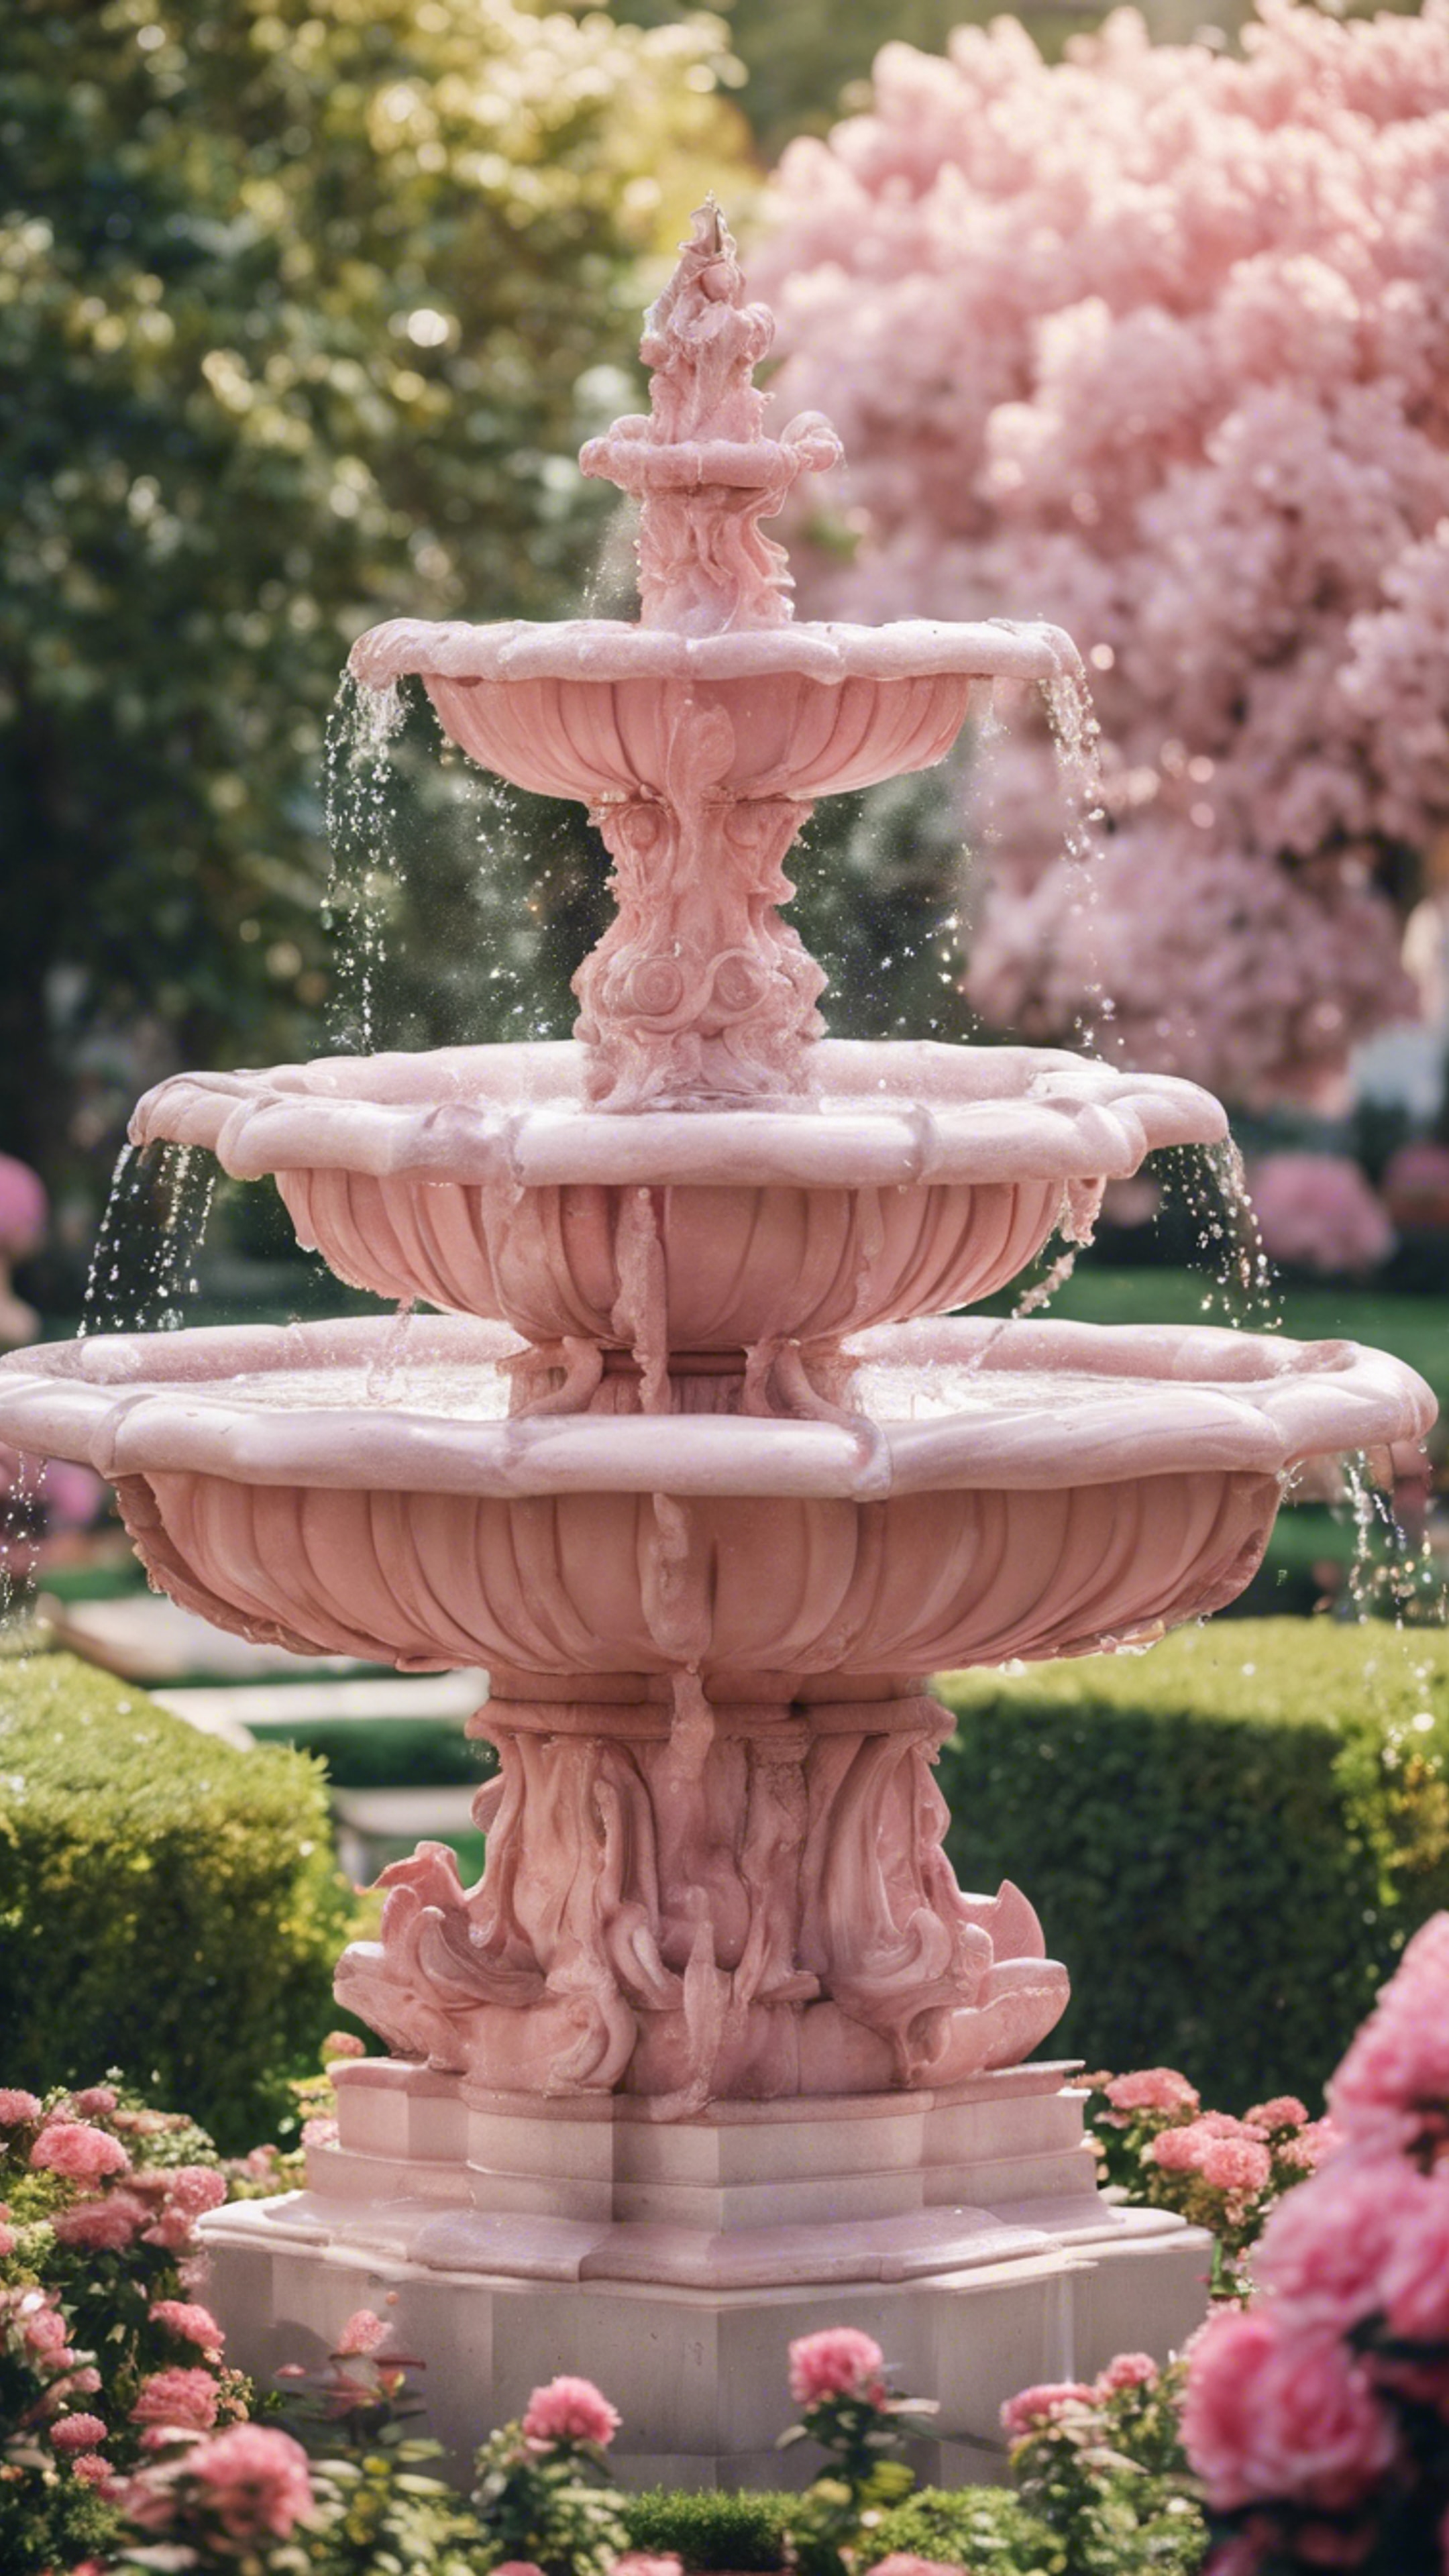 A fountain made of pink marble in an elegant flower garden. 벽지[73b566b49d564d04a87c]